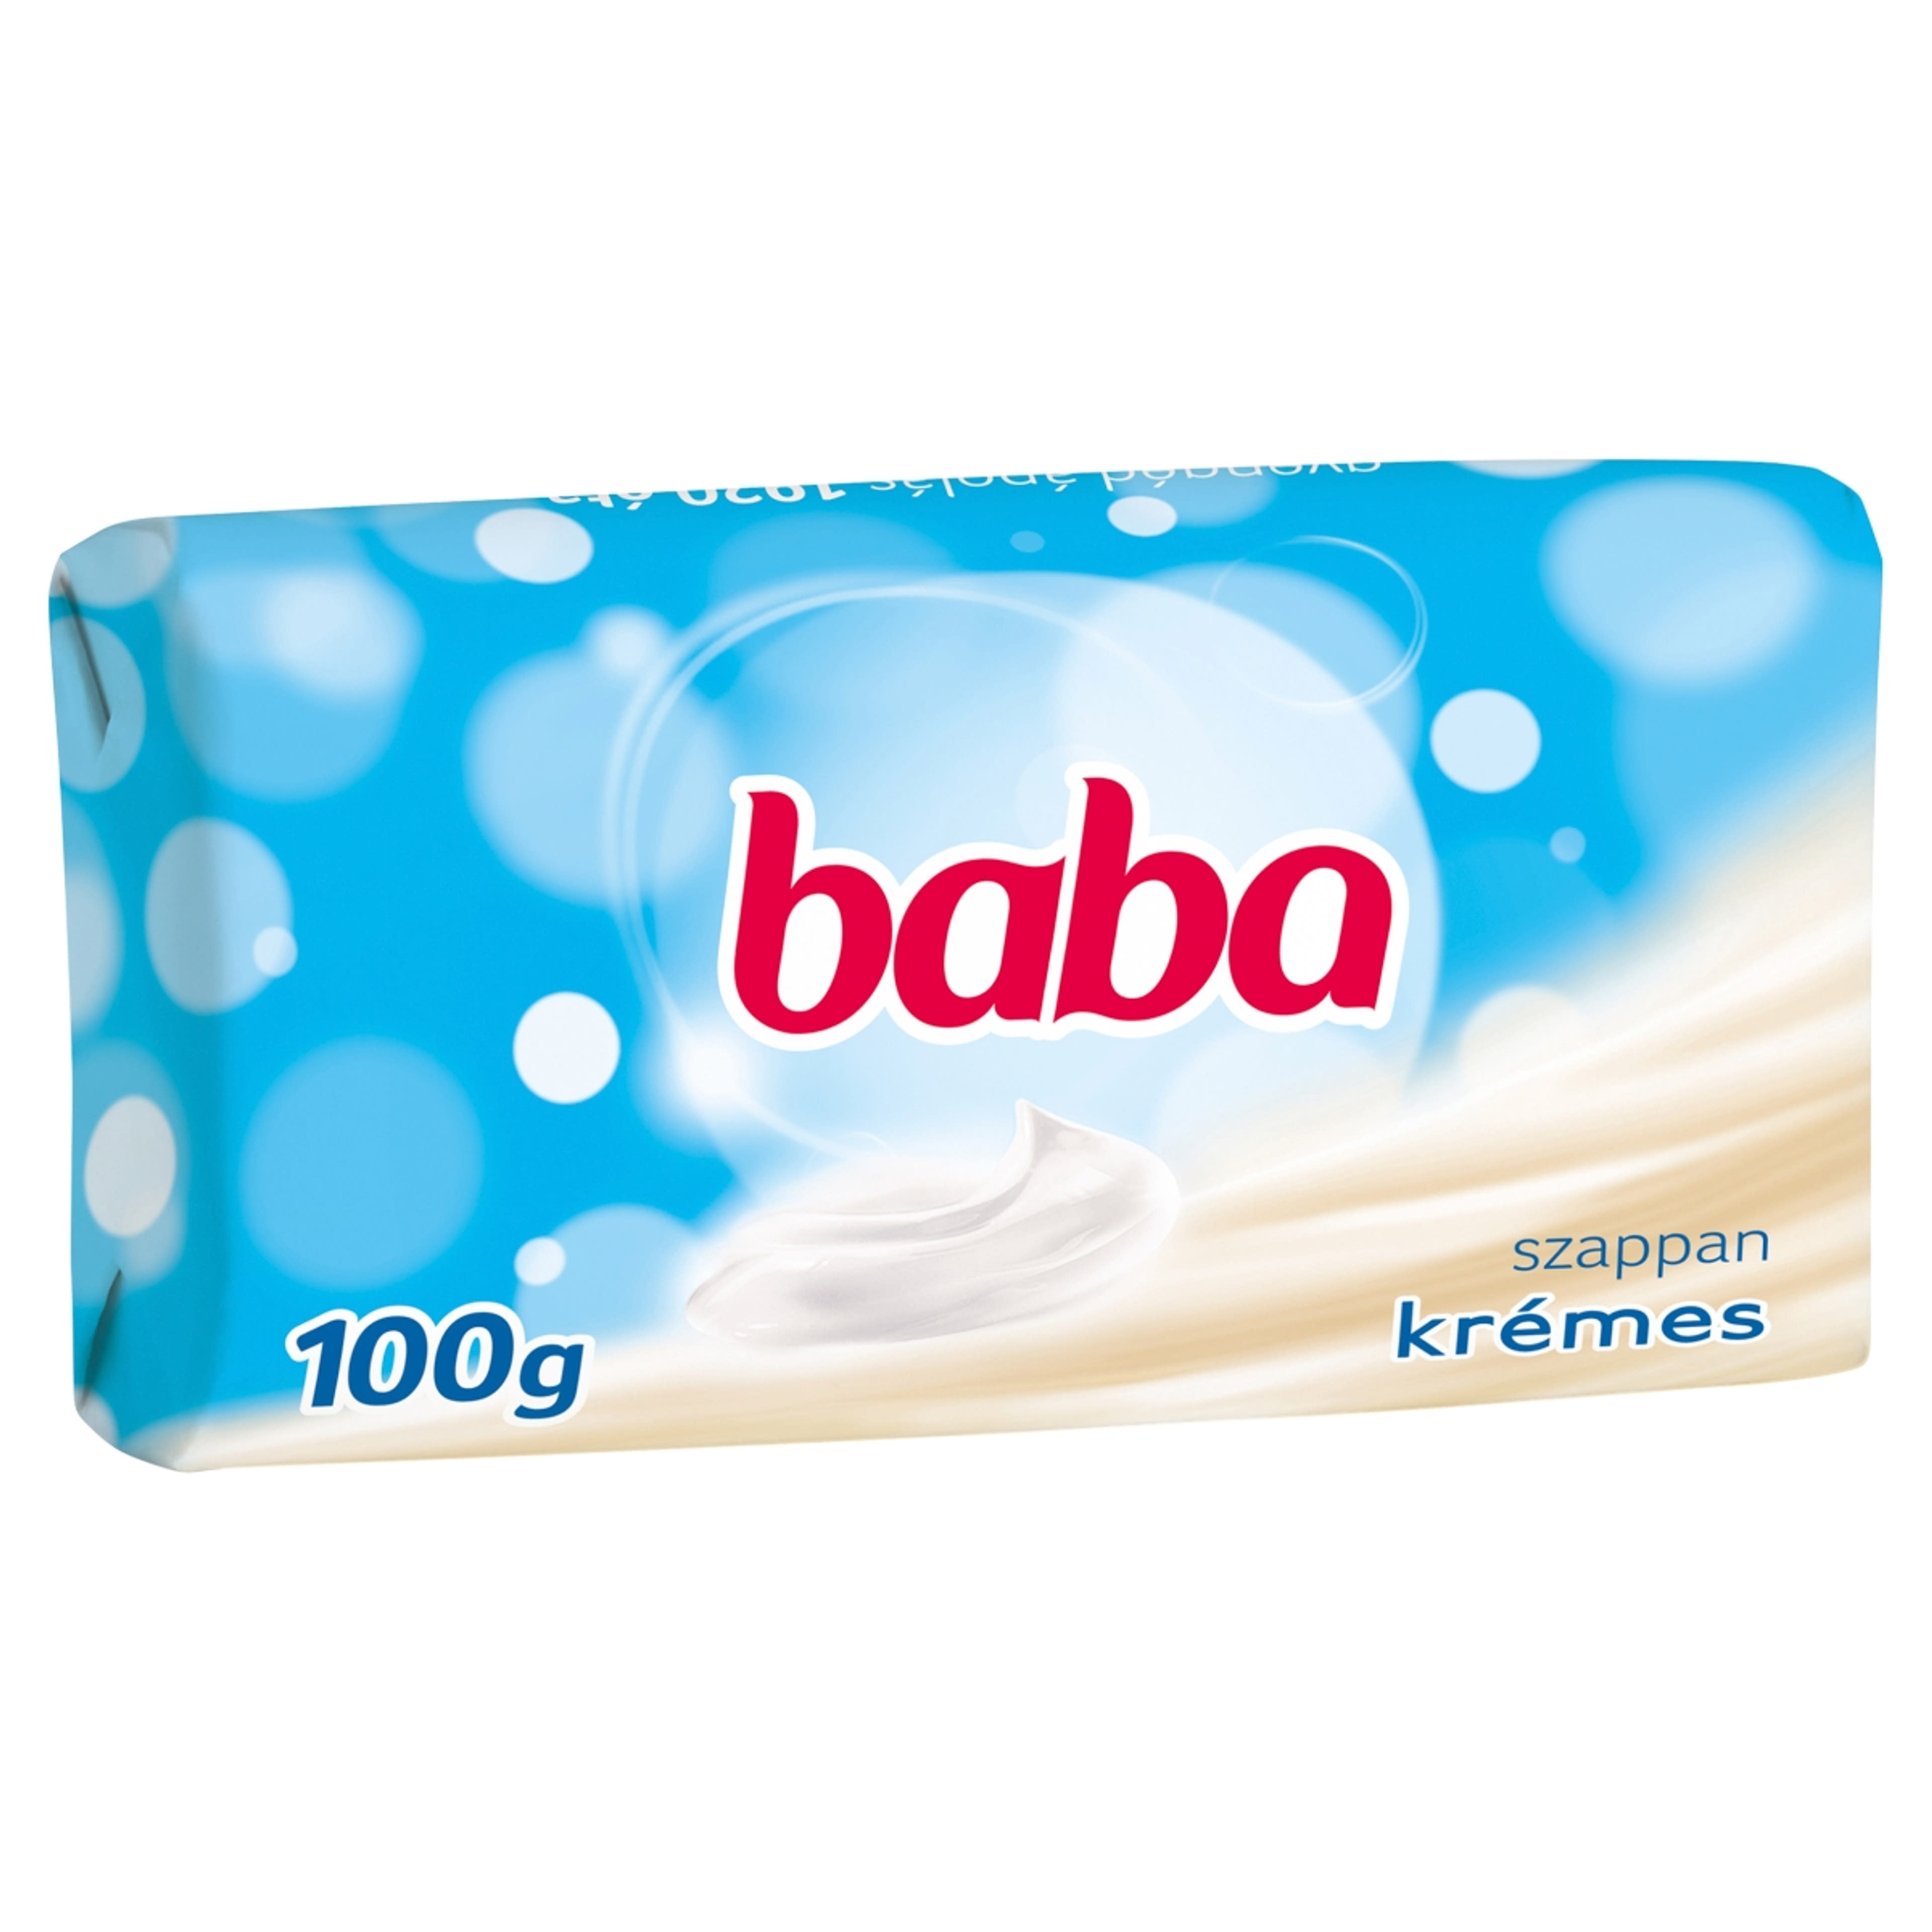 Baba krémes szappan - 100 g